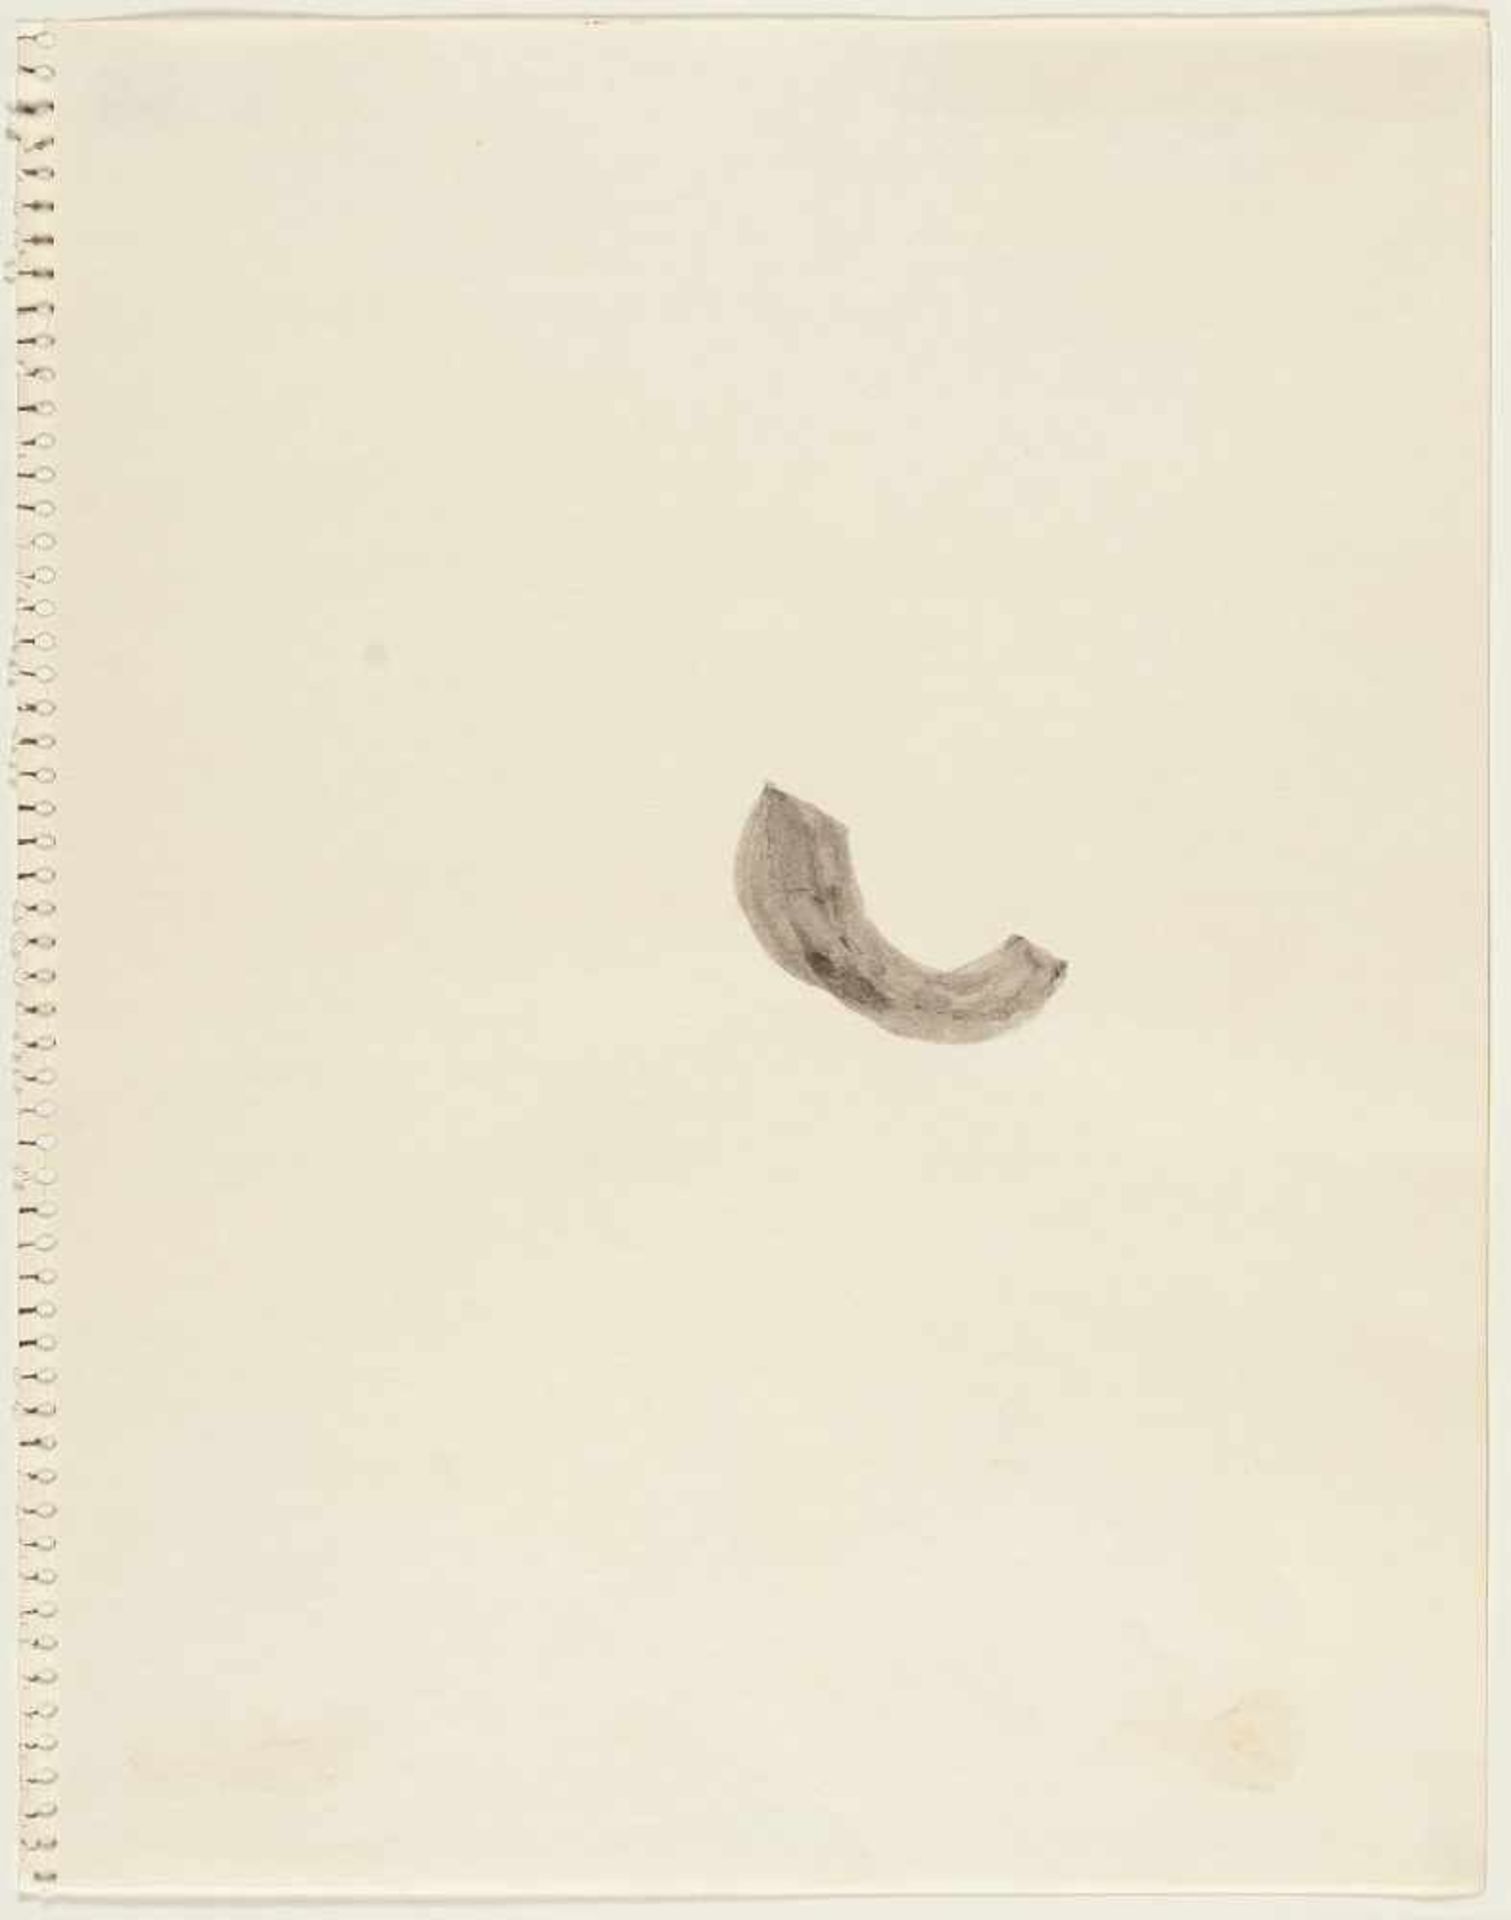 Richard Tuttle1941 Rahway/New JerseyOhne Titel (graue amorphe Form)Aquarell auf Velin. 1973. Ca. - Bild 2 aus 3